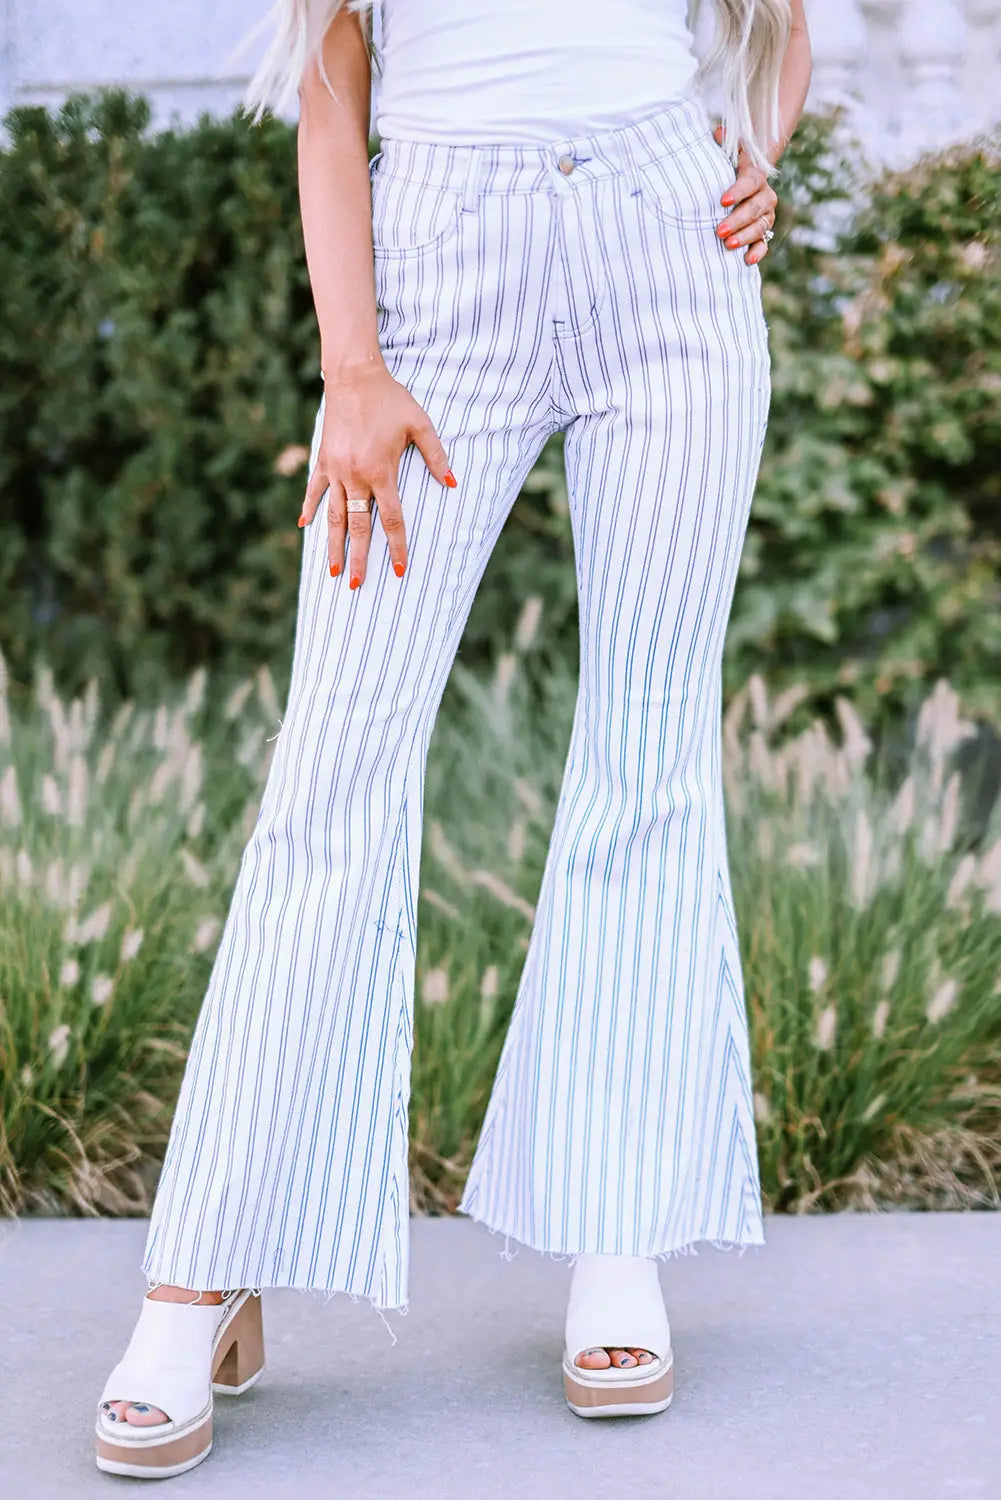 White high waist striped print flared pants - s / 98% cotton + 2% elastane - wide leg